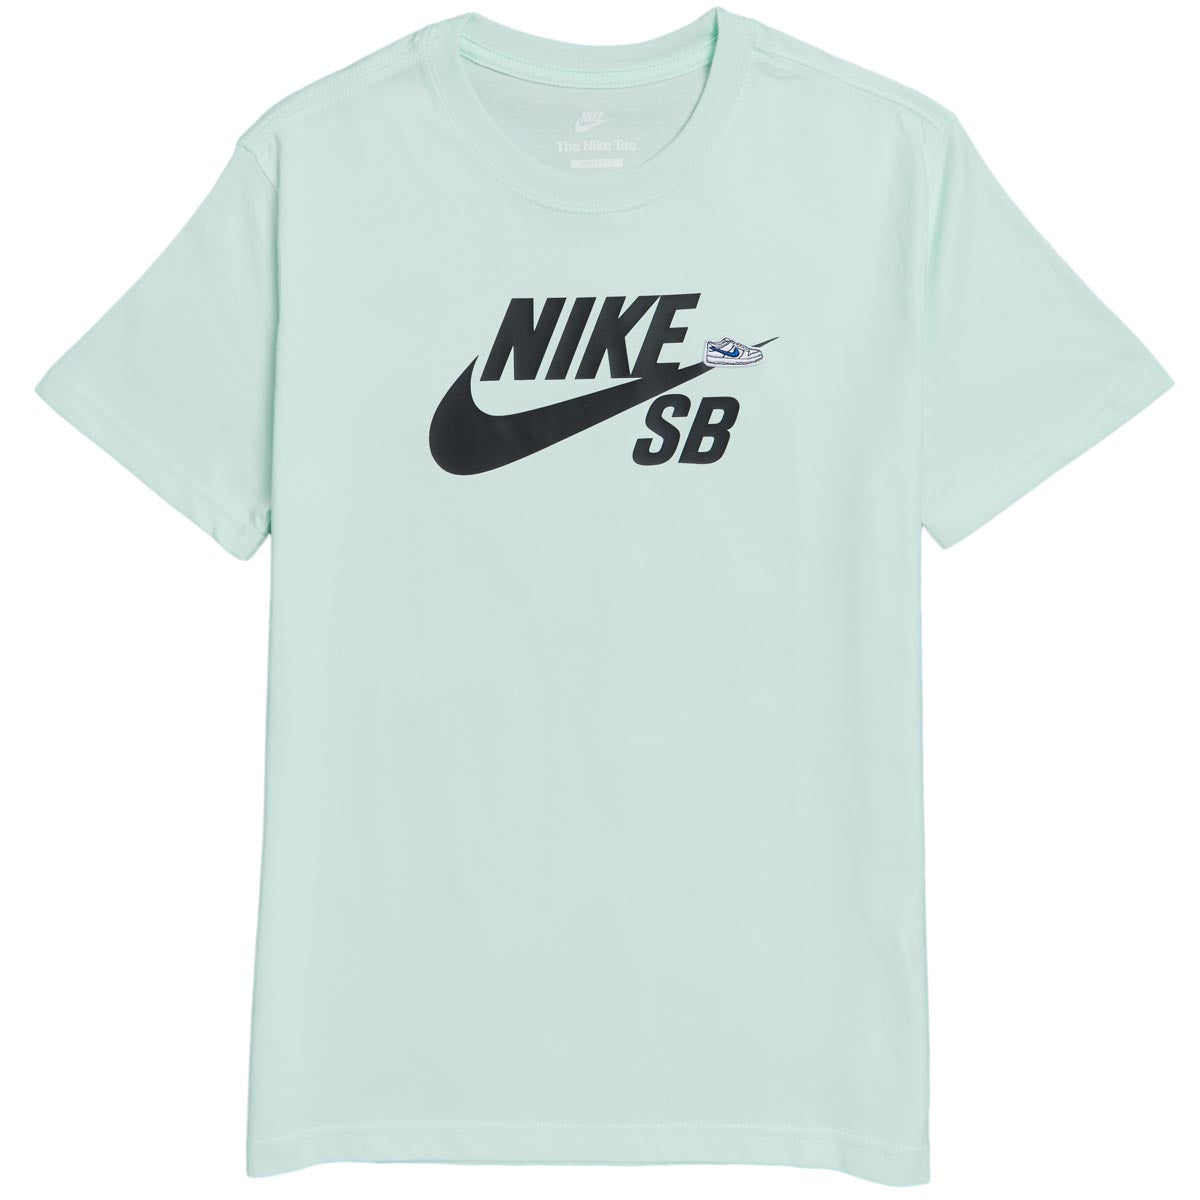 Nike SB Youth Logo T-Shirt - Barely Green image 1